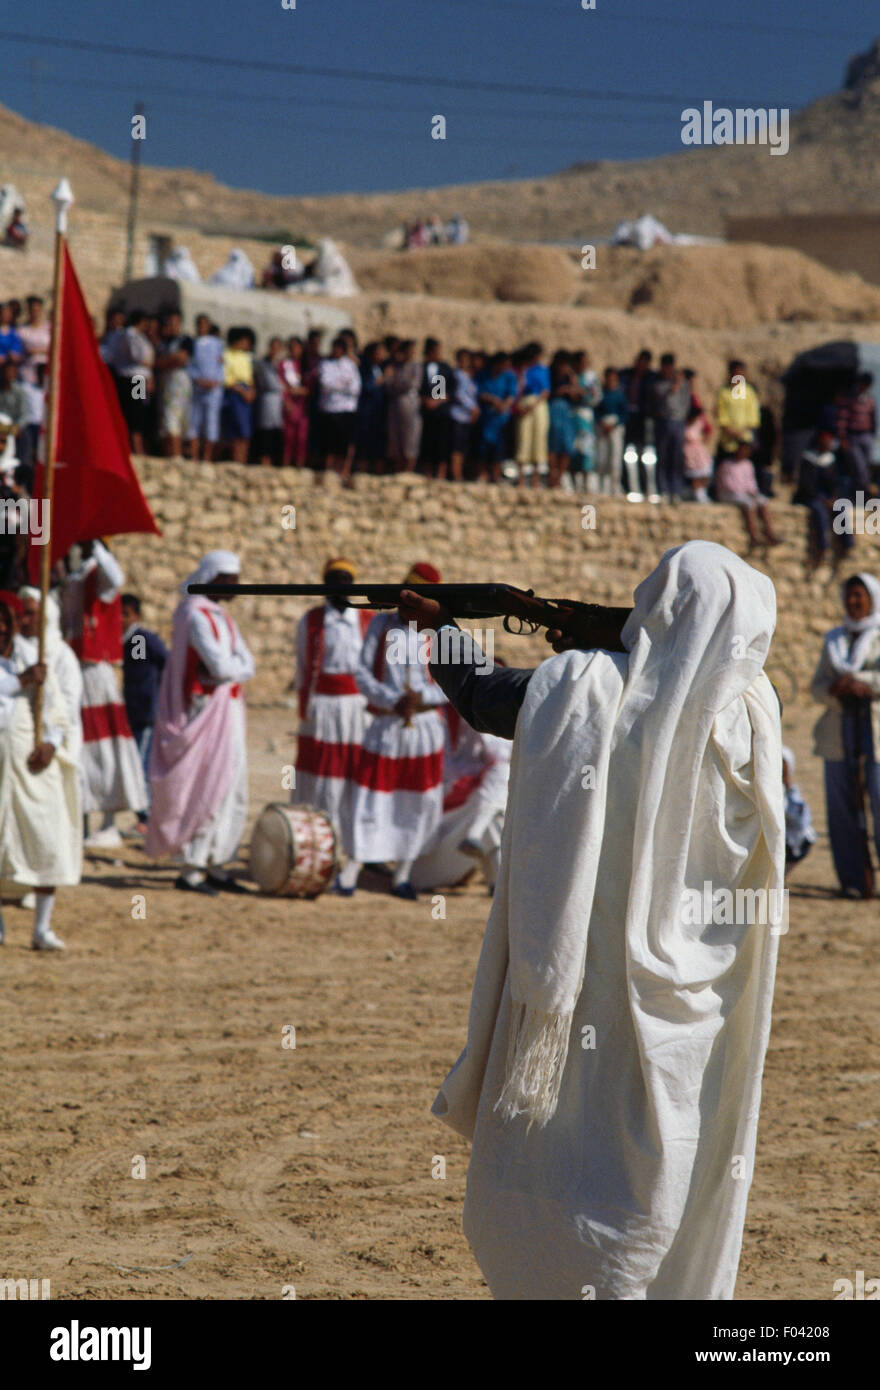 Man in traditional clothes aiming a rifle, Matmata Berber festival, Tunisia. Stock Photo